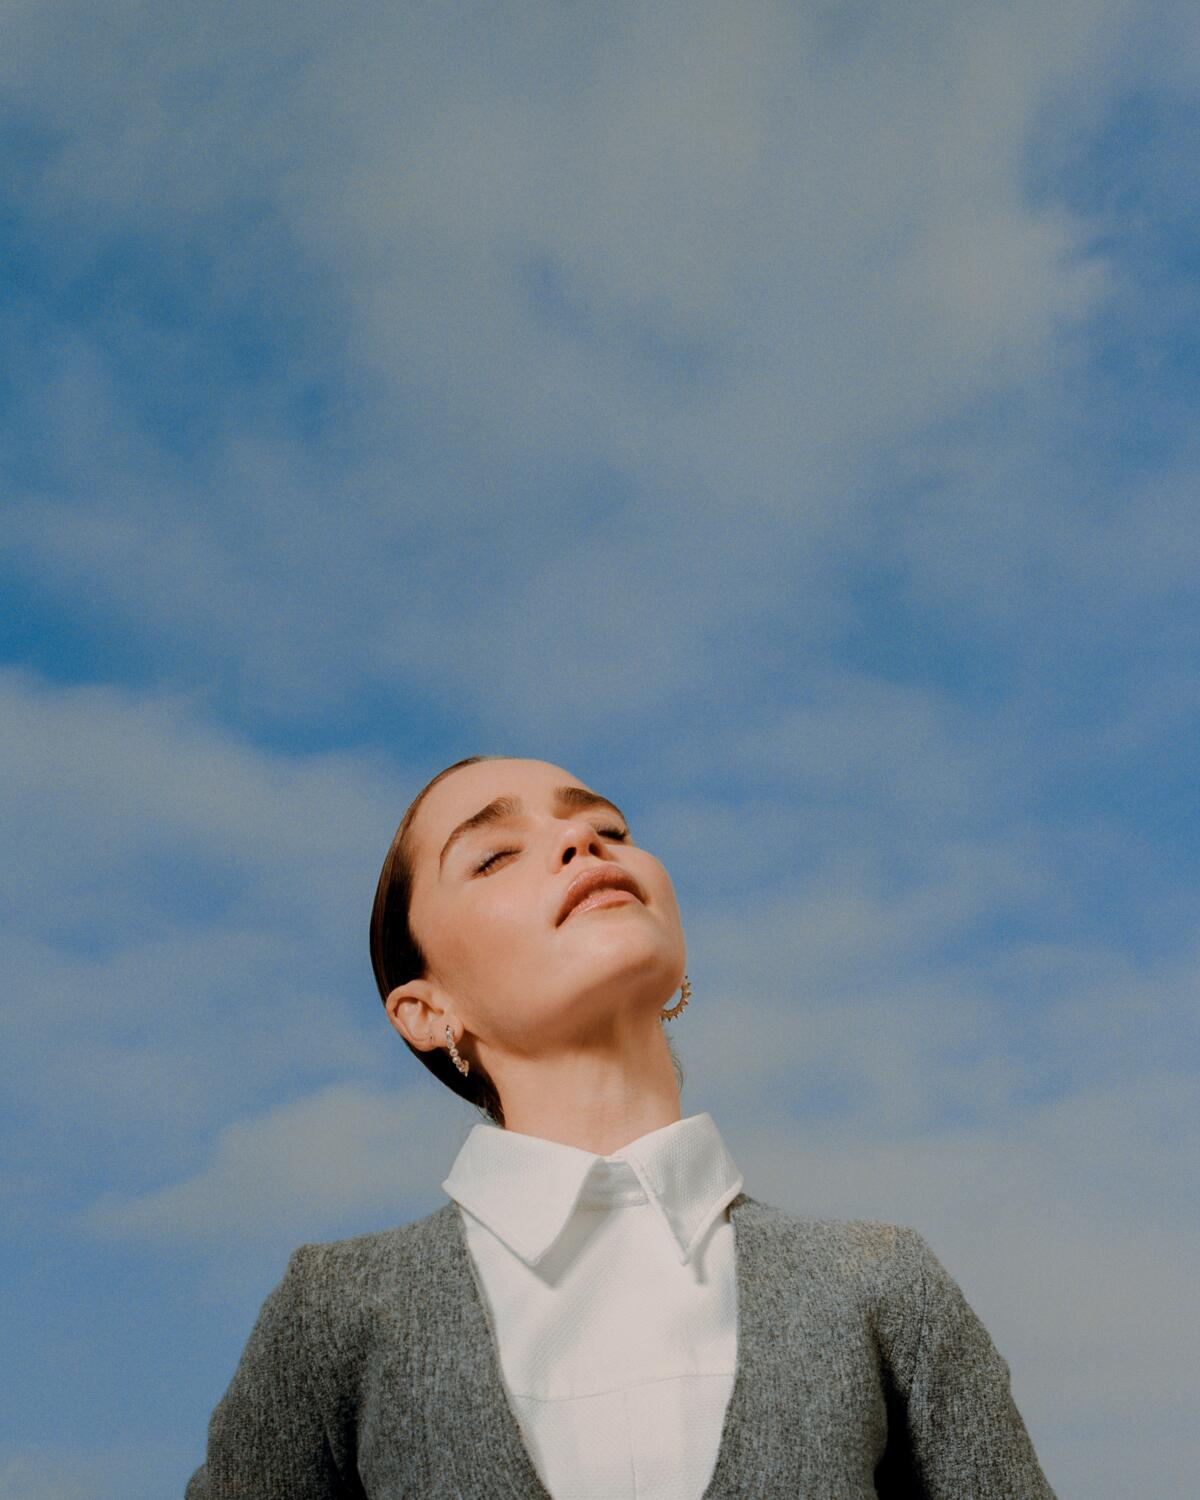 Emilia Clarke looks upward toward a blue cloudy sky.